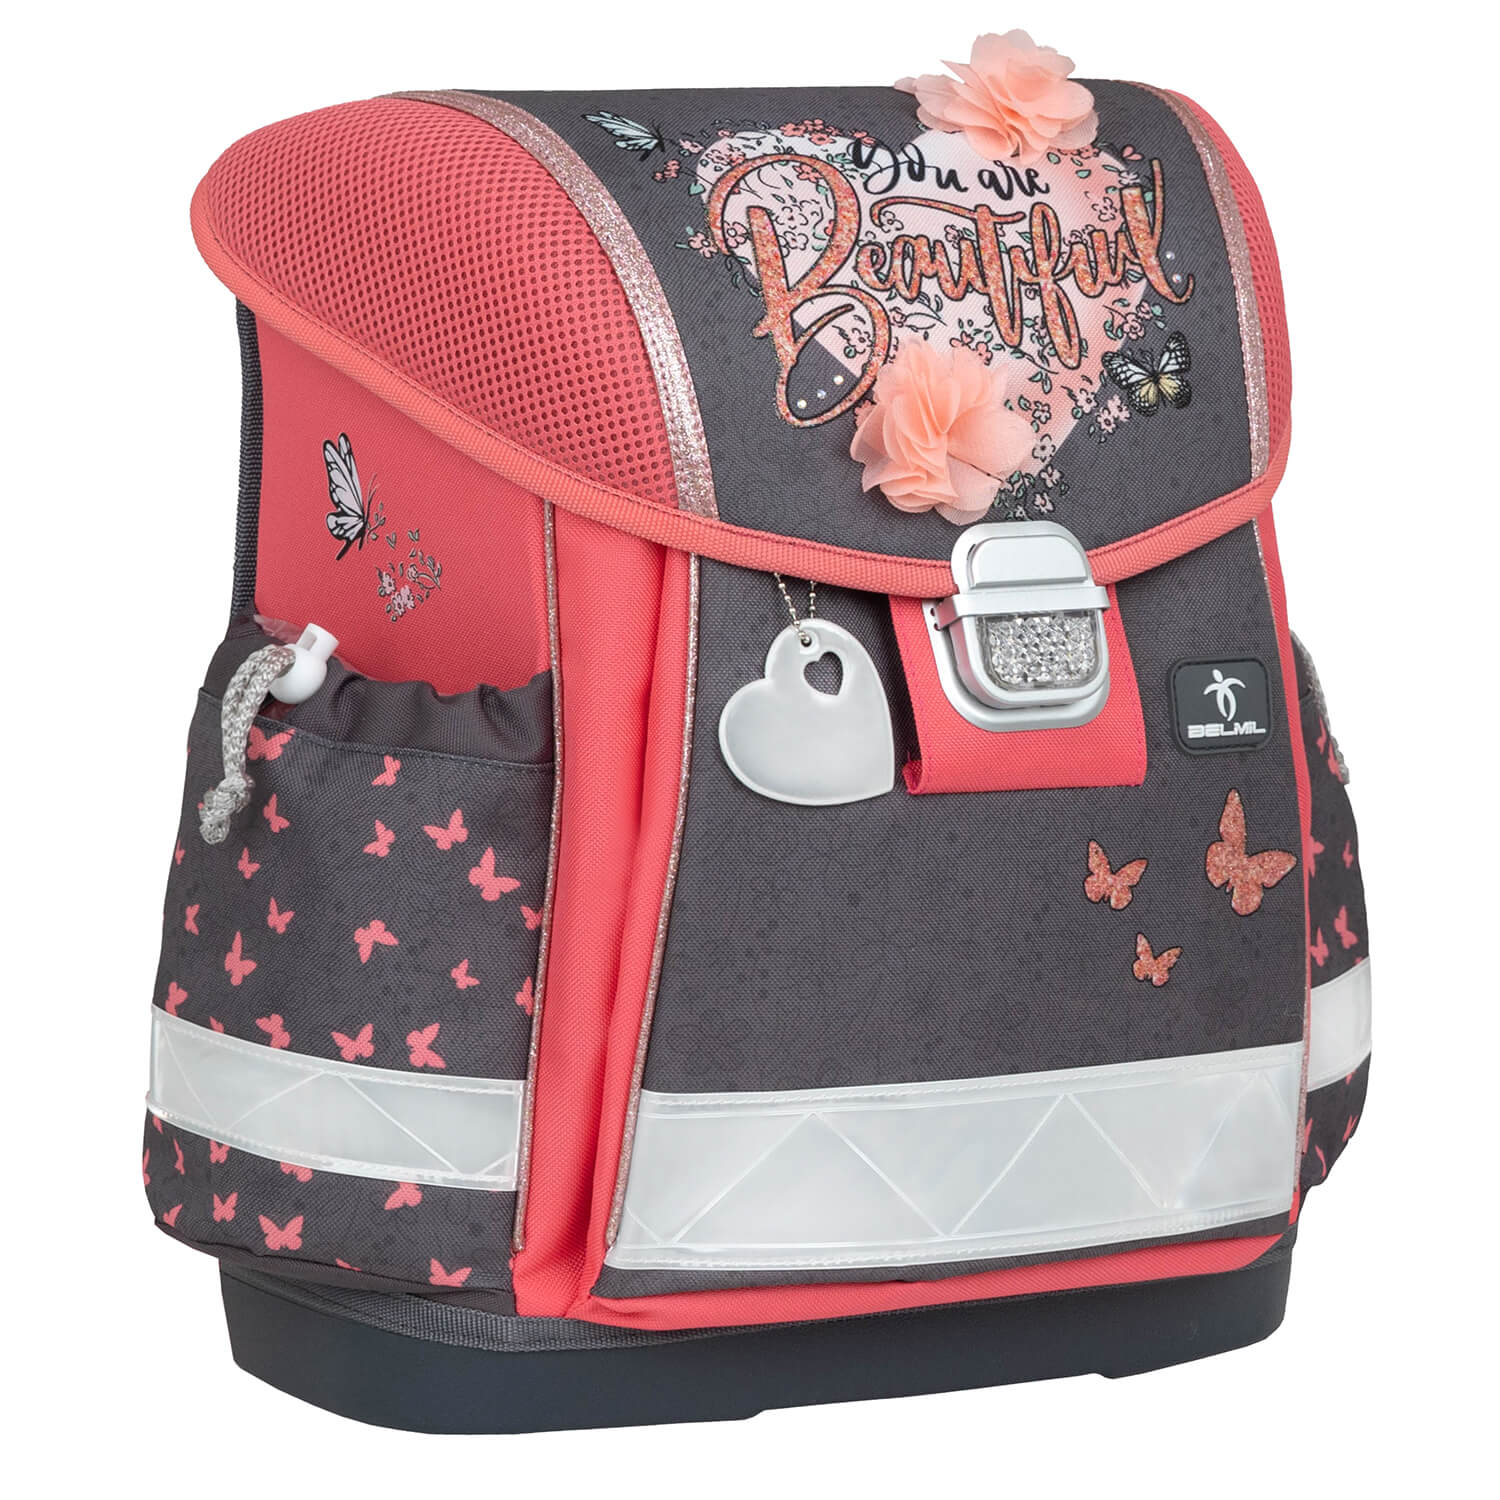 Classy Bloomy Blossom schoolbag set 4 pcs